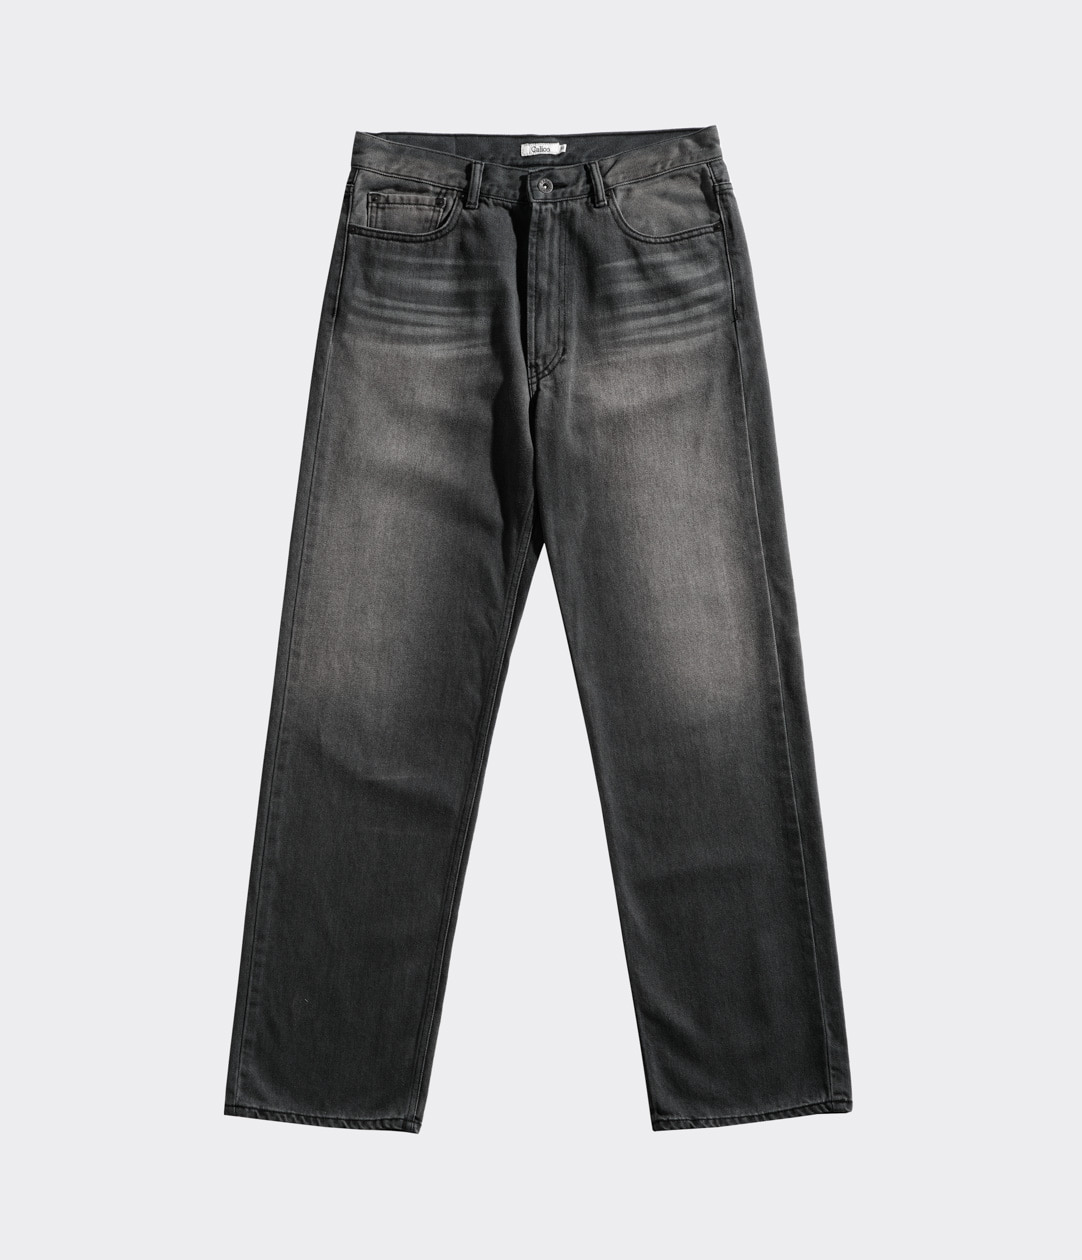 「Dry Goods」Calico Jeans (3rd Gen) / Noir Balearic